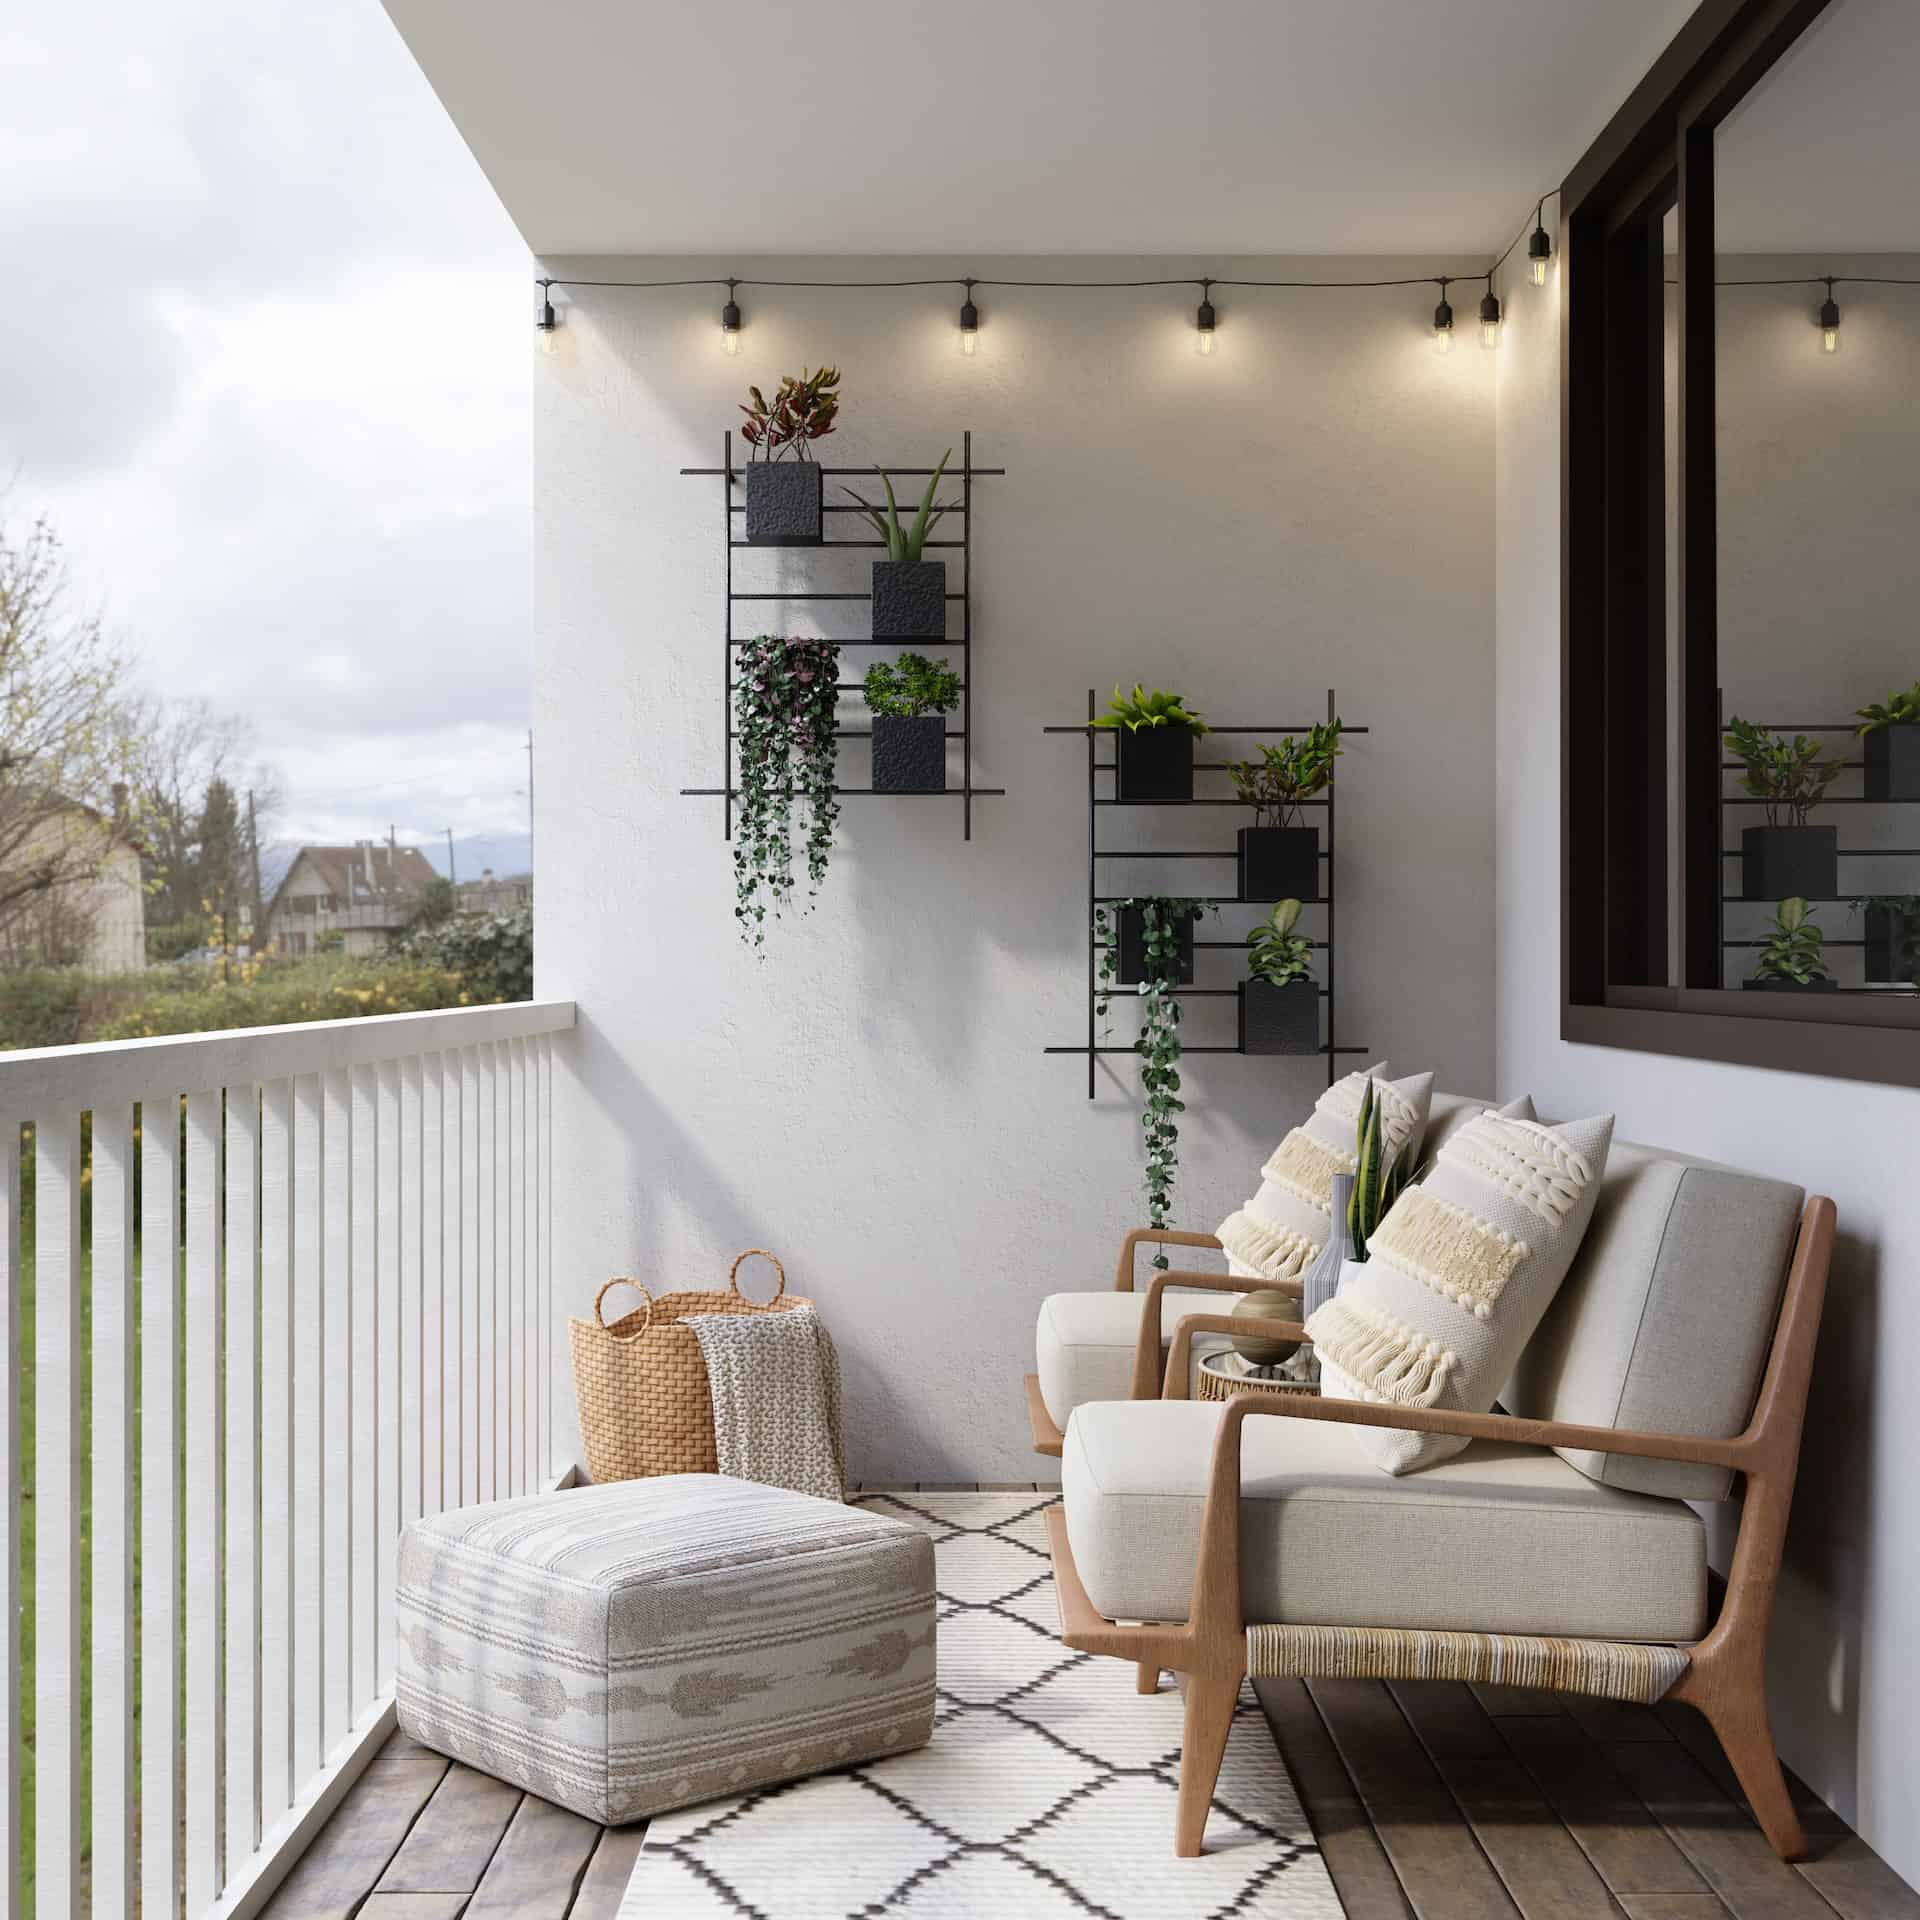 DIY on the balcony? Make a corner for creative work